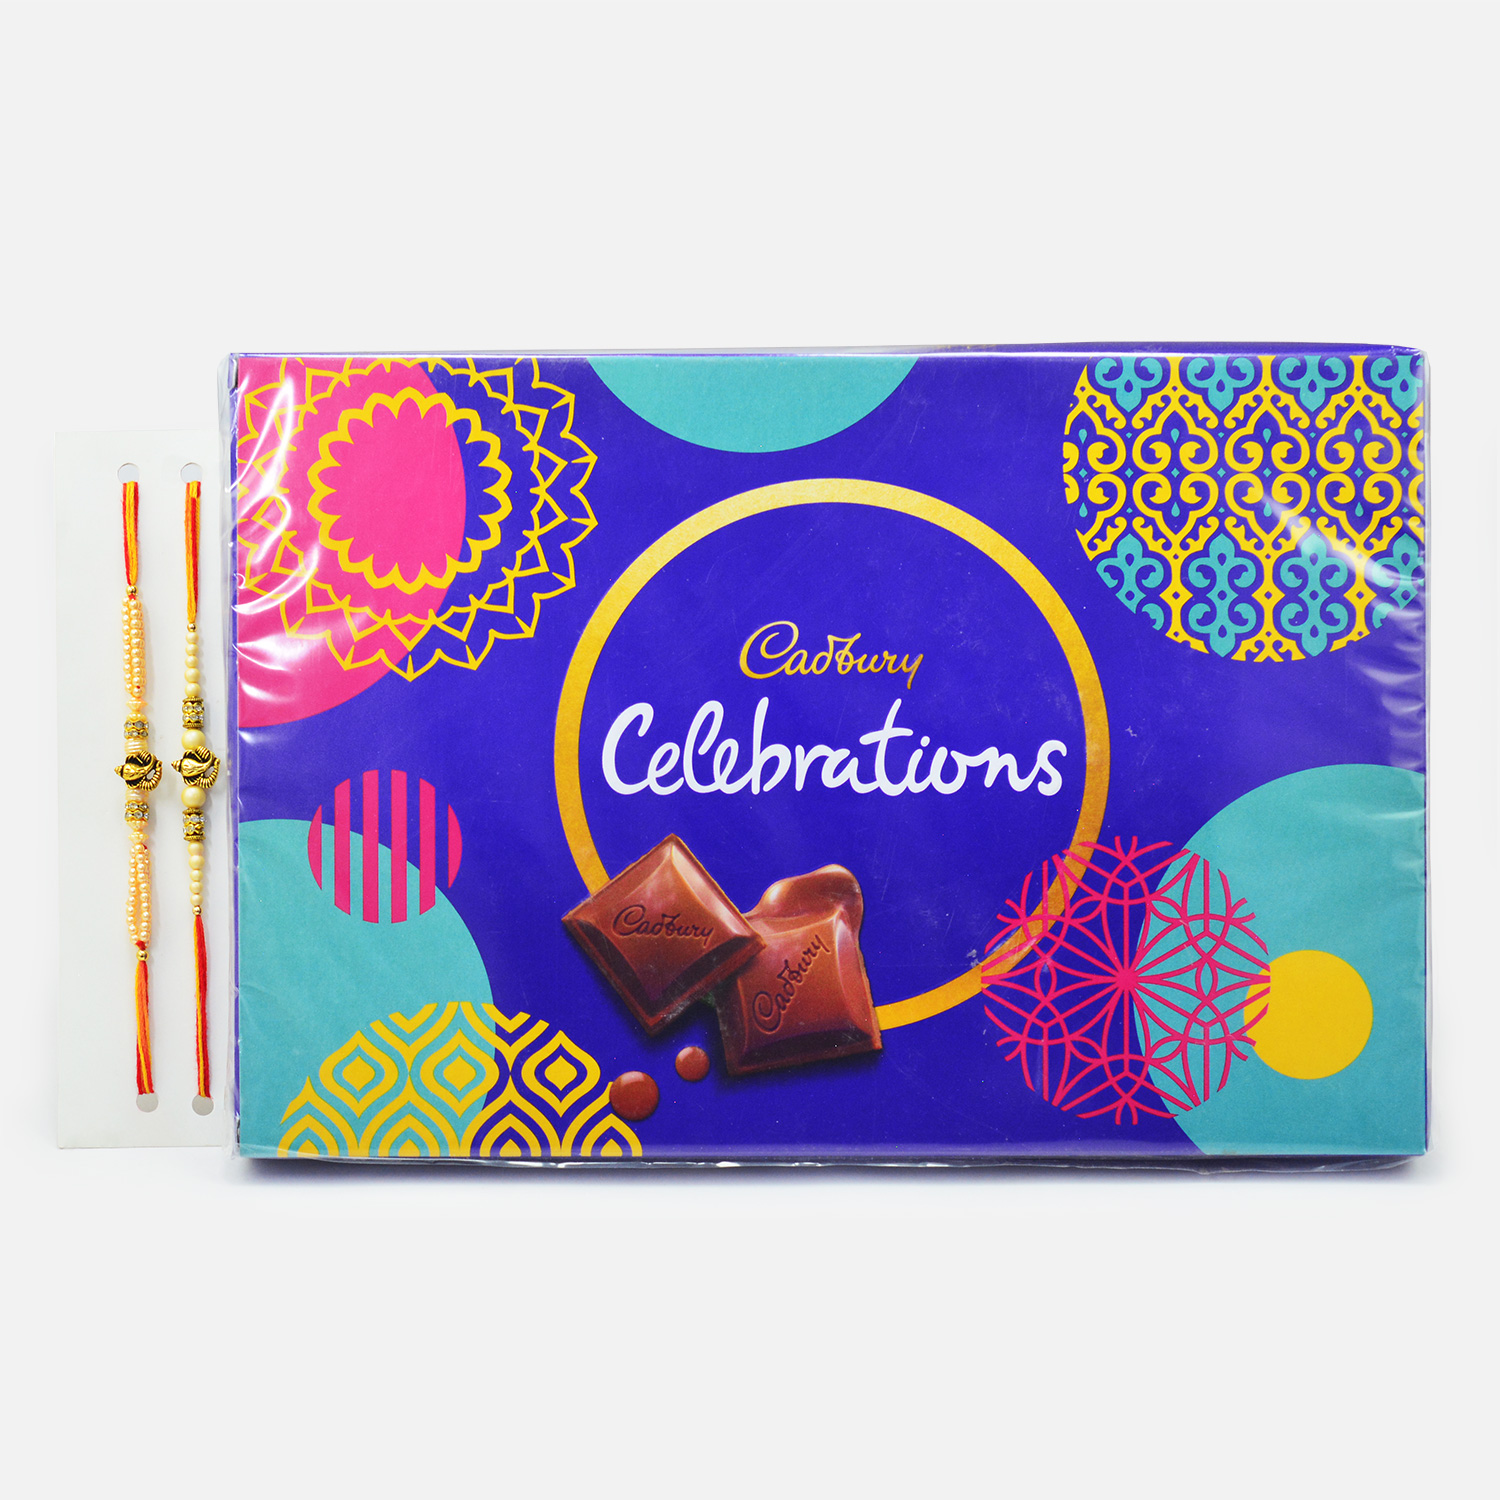 Ganesha Divine Rakhis with Chocolate of Cadbury Small Celebration